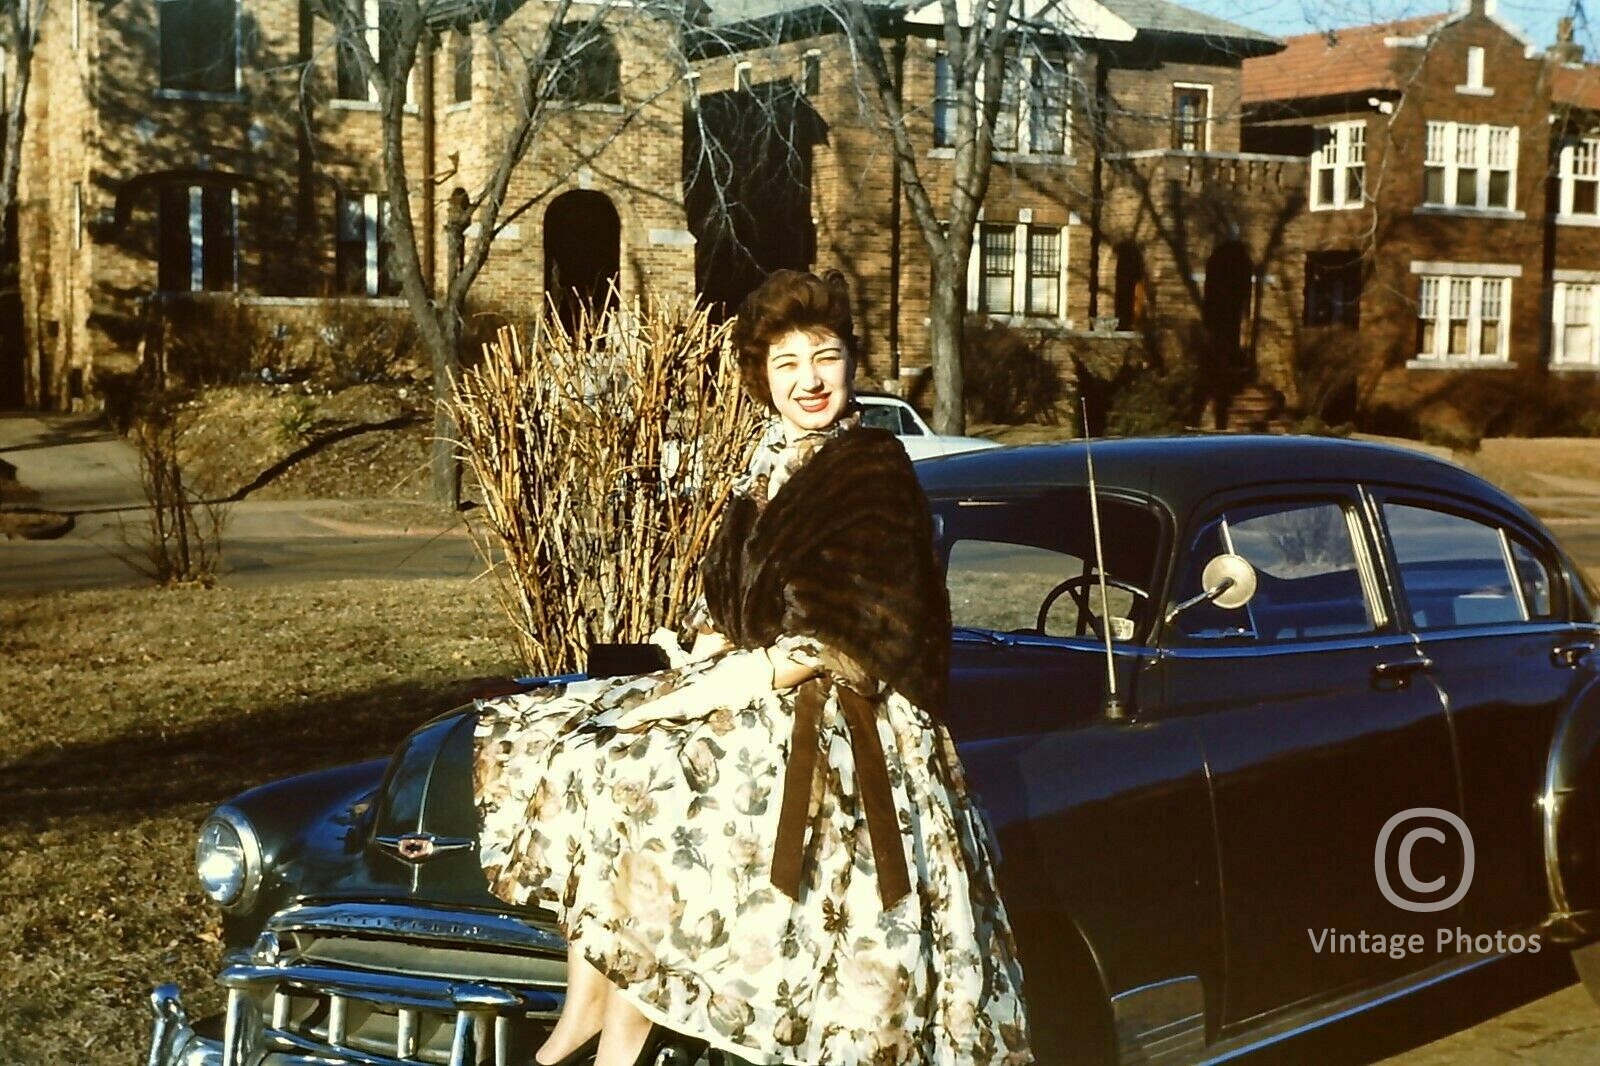 1950s American Fashion - Girl sitting on Automobile